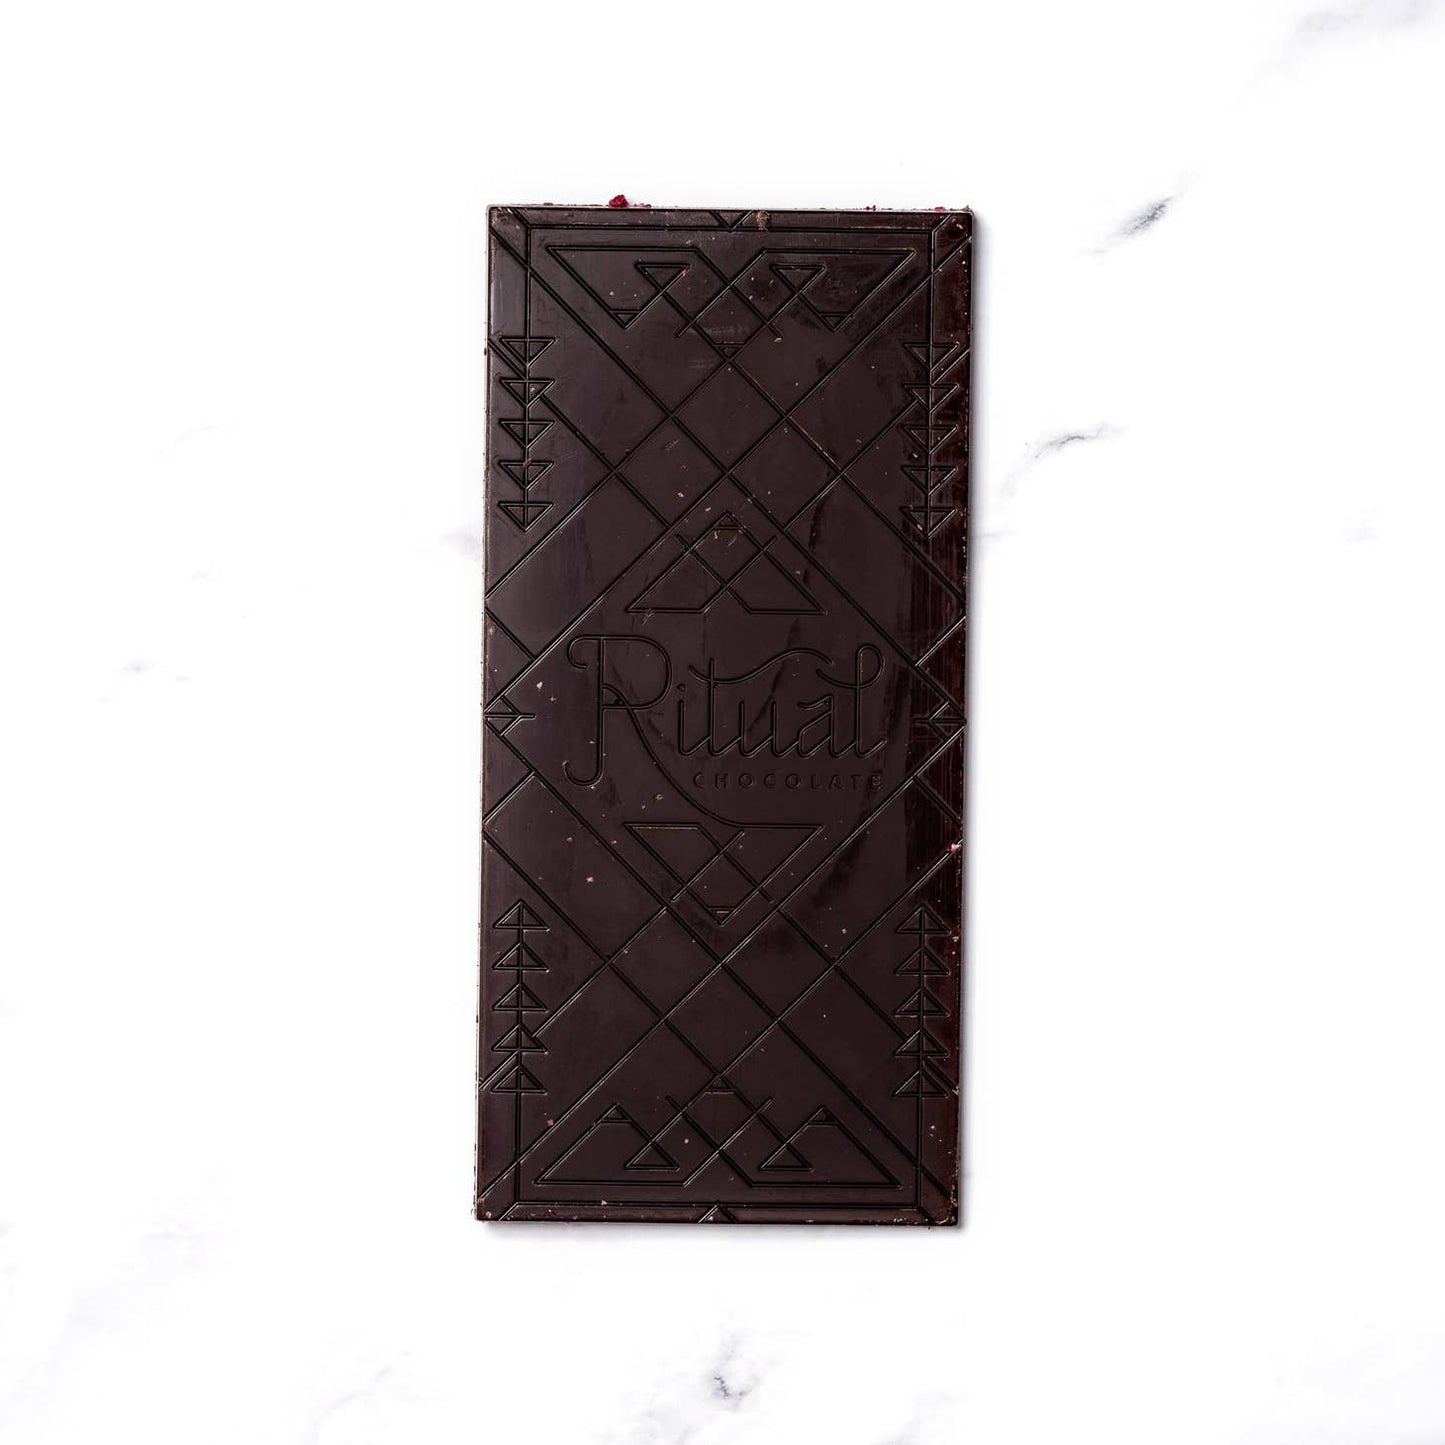 Ritual Chocolate - Honeycomb Toffee Chocolate, 70% Cacao